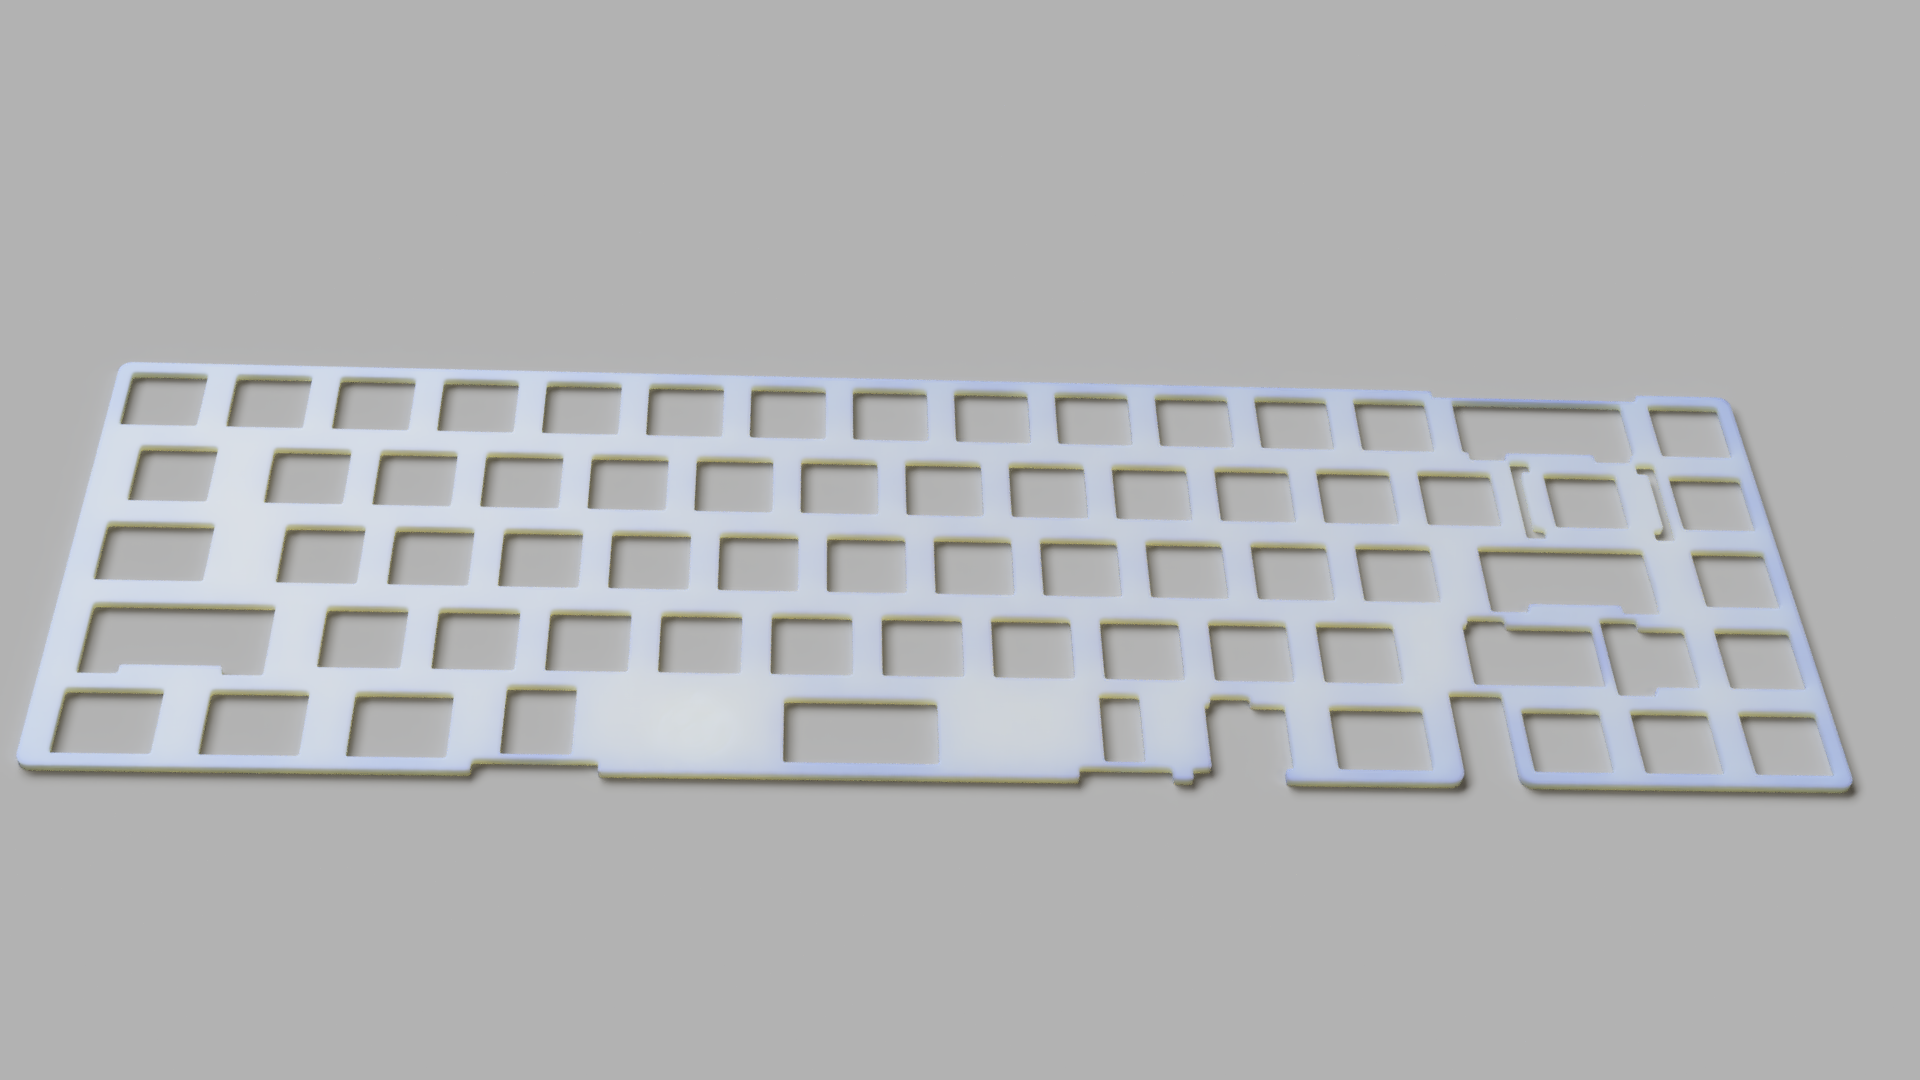 Ciel65 - Gasket 65% Keyboard